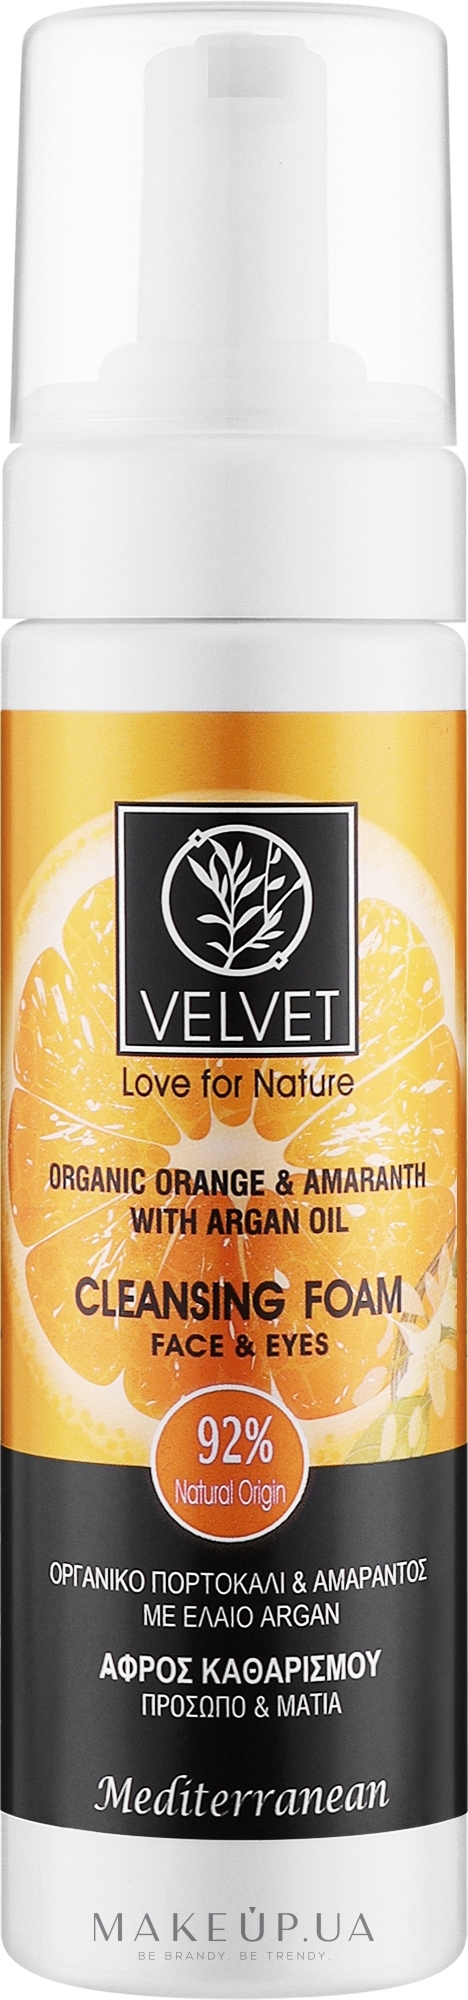 Очищающая пенка для лица и глаз - Velvet Love for Nature Organic Orange & Amaranth Cleansing Foam Face & Eyes — фото 200ml